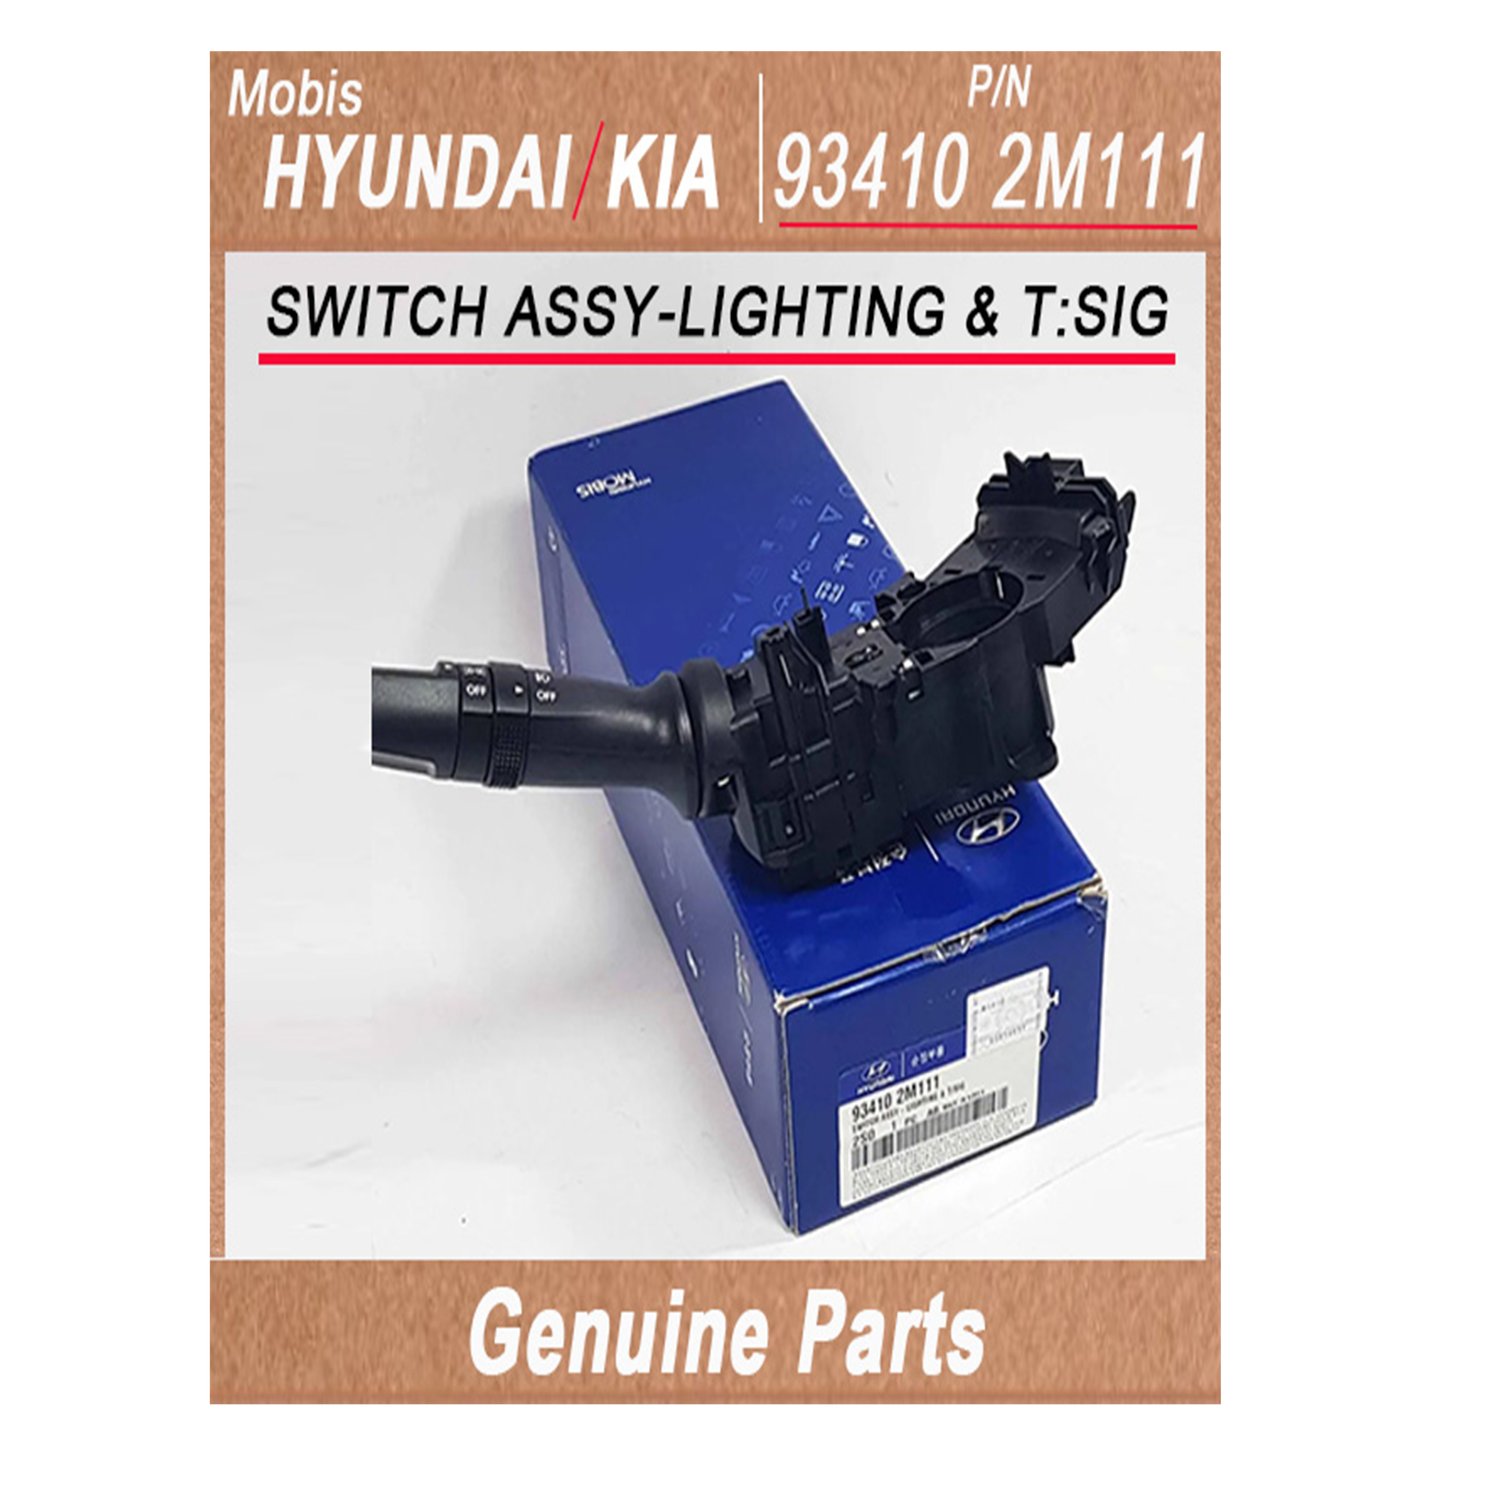 934102M111 _ SWITCH ASSY_LIGHTING _ T_SIG _ Genuine Korean Automotive Spare Parts _ Hyundai Kia _Mob